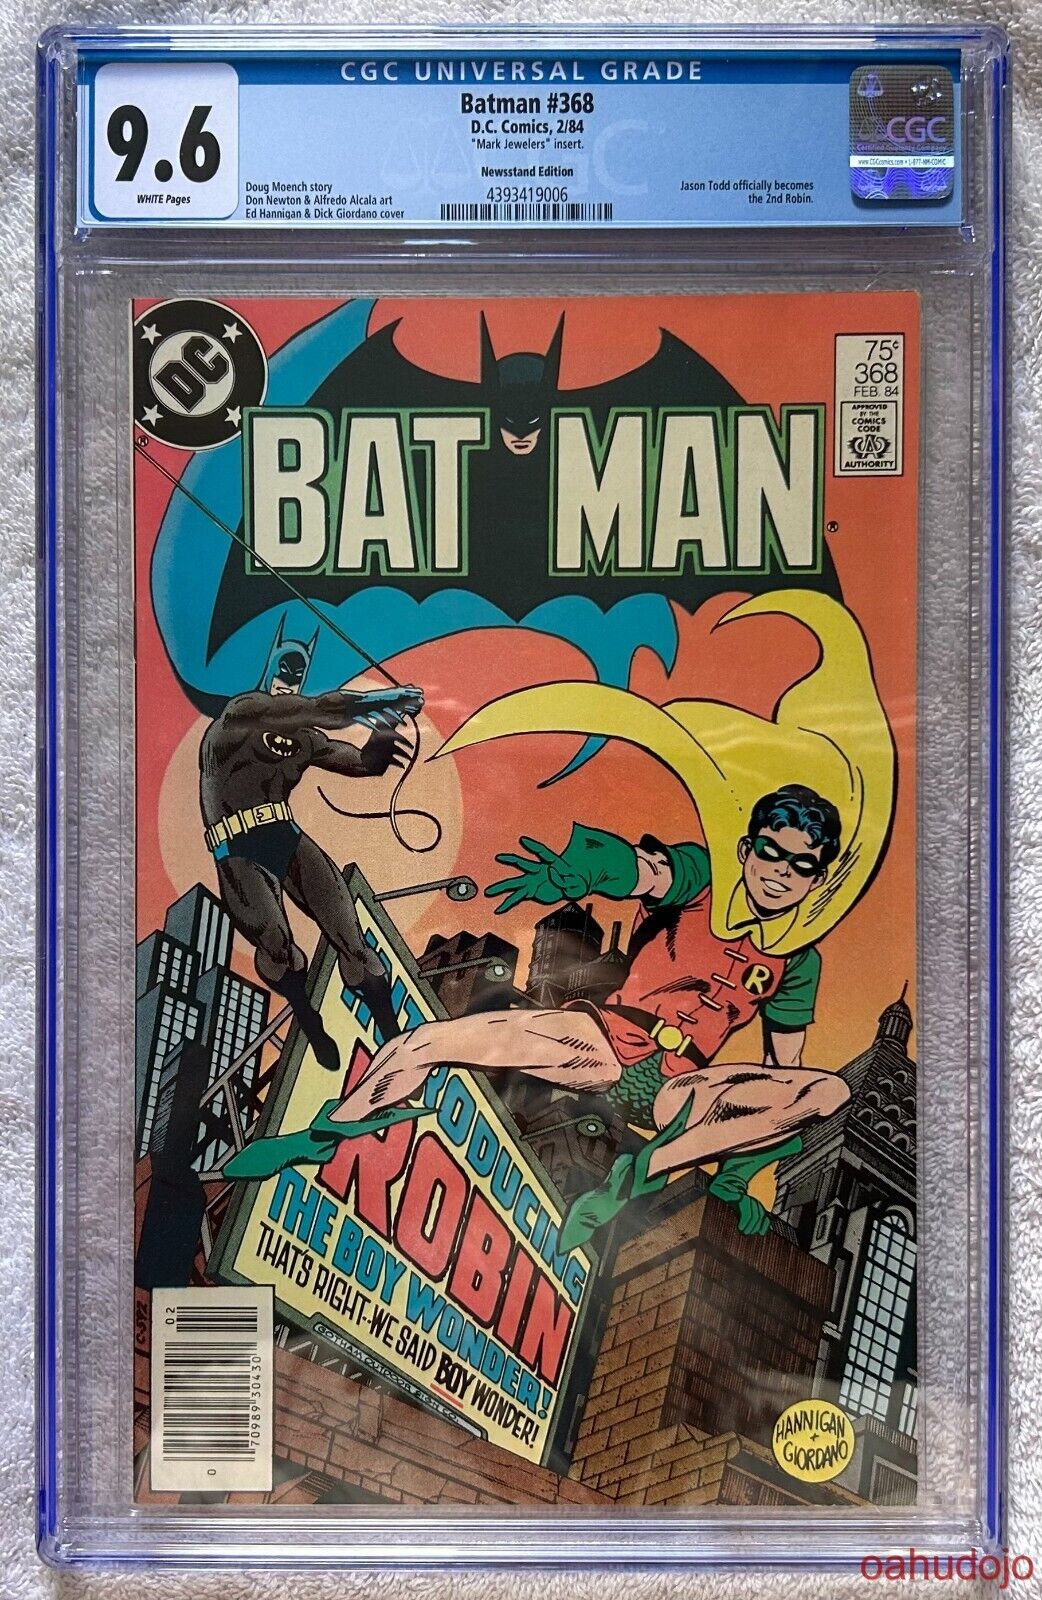 DC BATMAN #368 Jason Todd ROBIN Mark Jewelers Insert 1984 Key Issue CGC 9.6